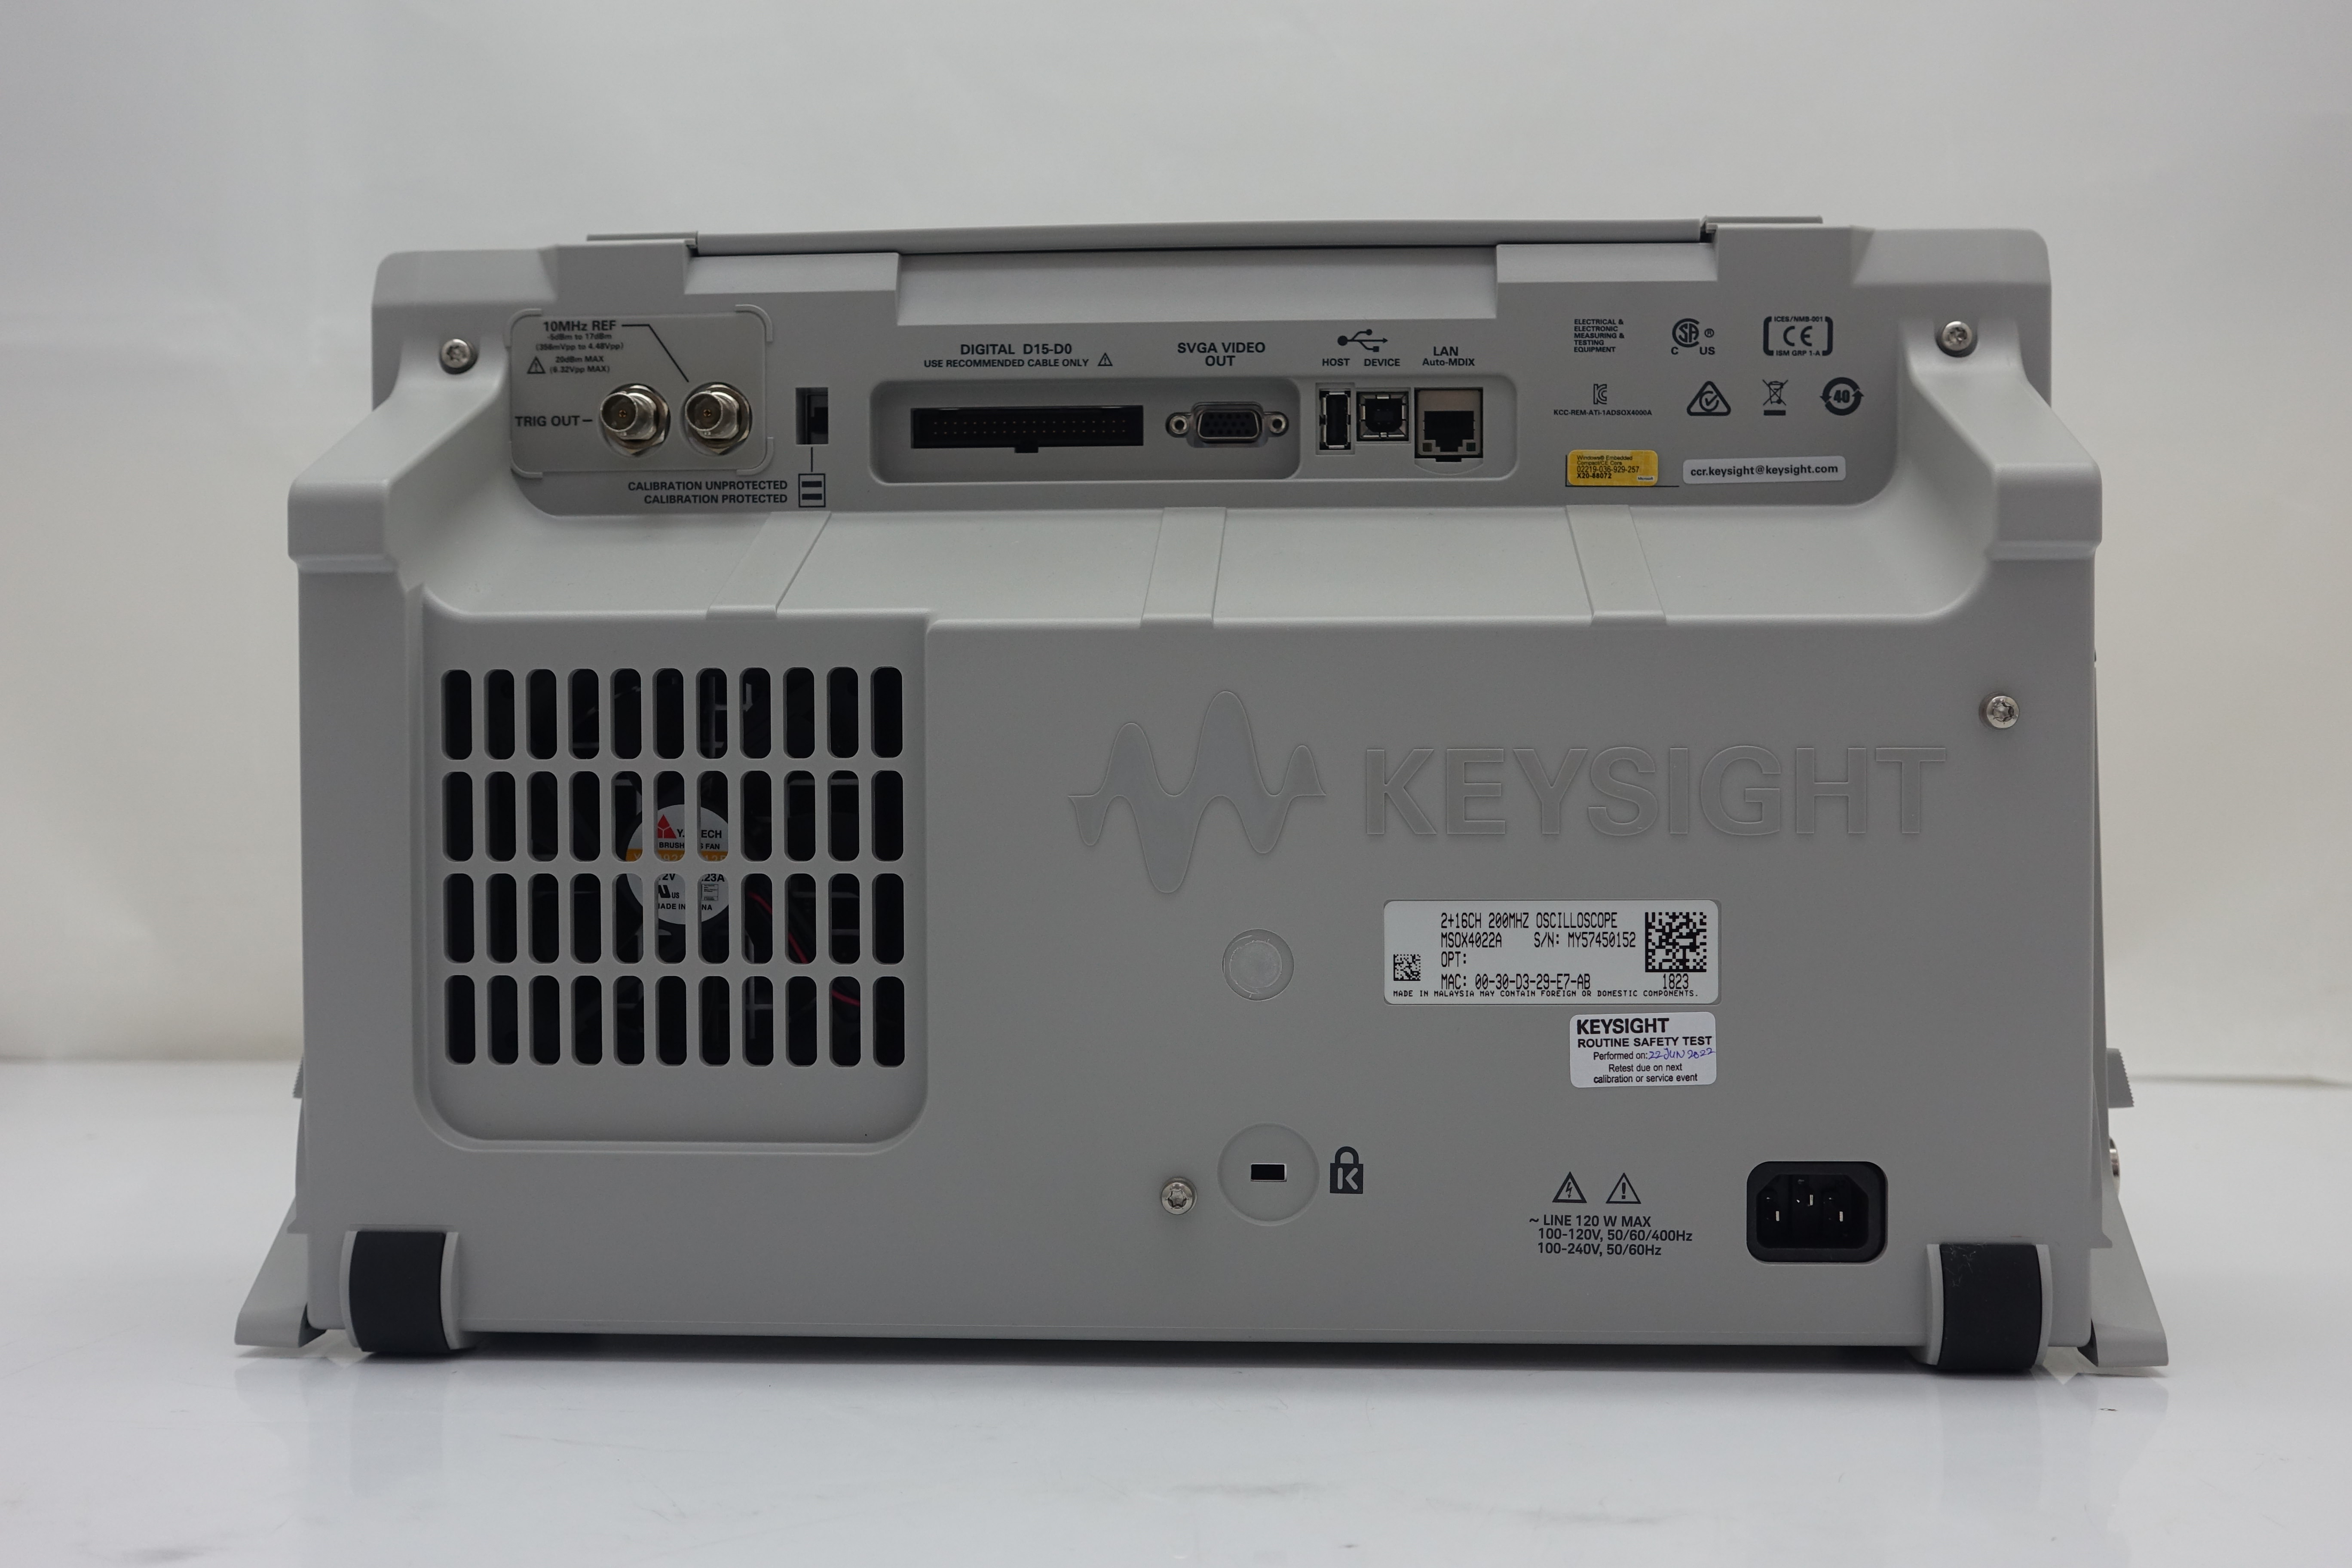 Keysight MSOX4022A Mixed Signal Oscilloscope / 200 MHz / 2 Analog Plus 16 Digital Channels